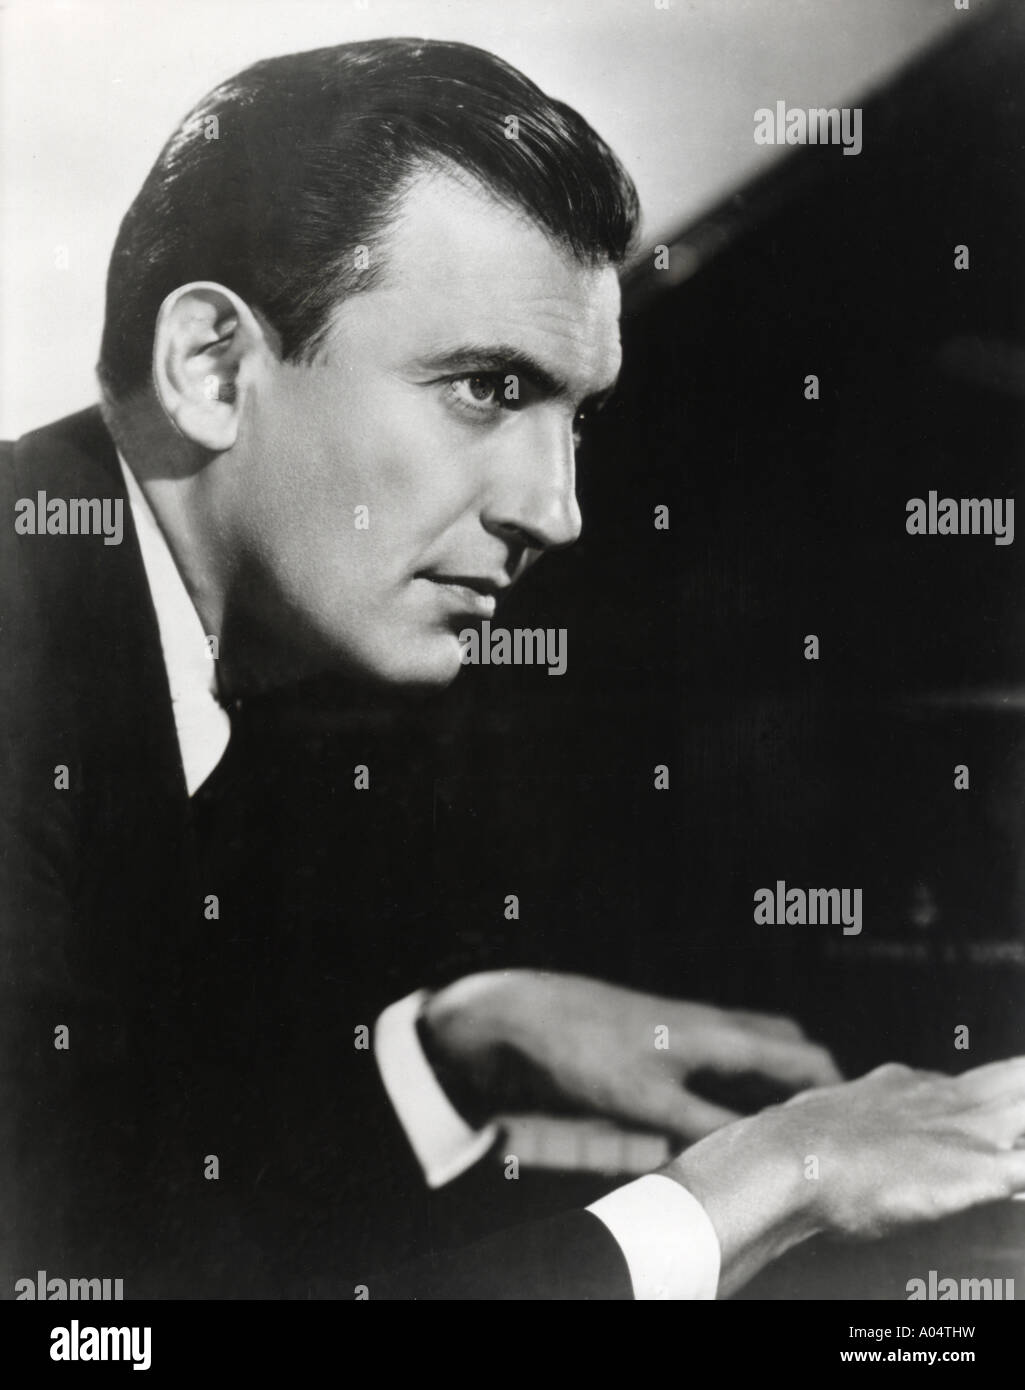 EDDY DUCHIN US bandleader and pianist 1909 to 1951 Stock Photo - Alamy